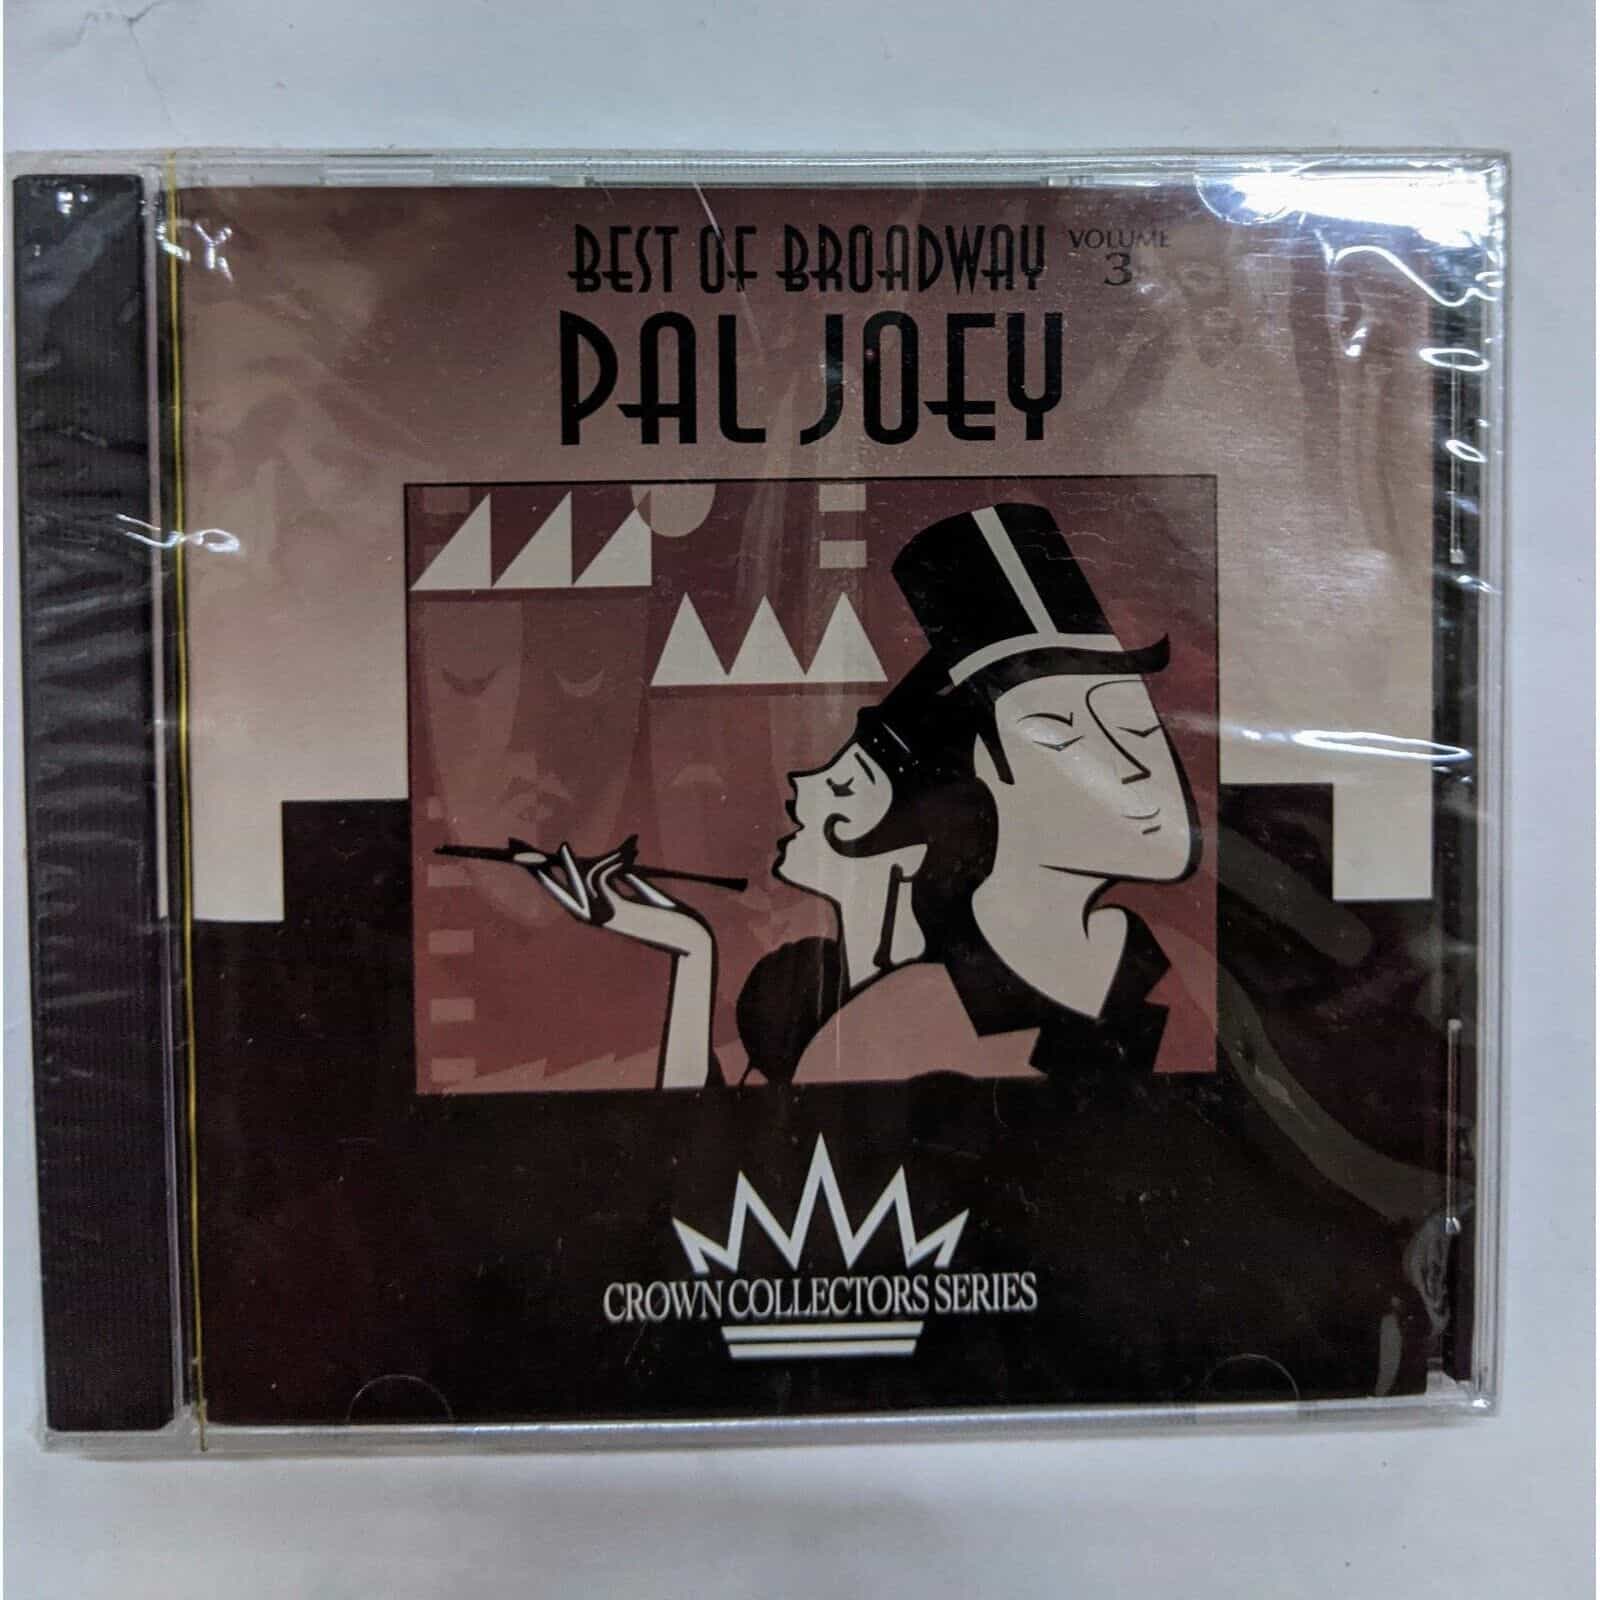 Best of Broadway Vol. 3 by Pal Joey Music Album